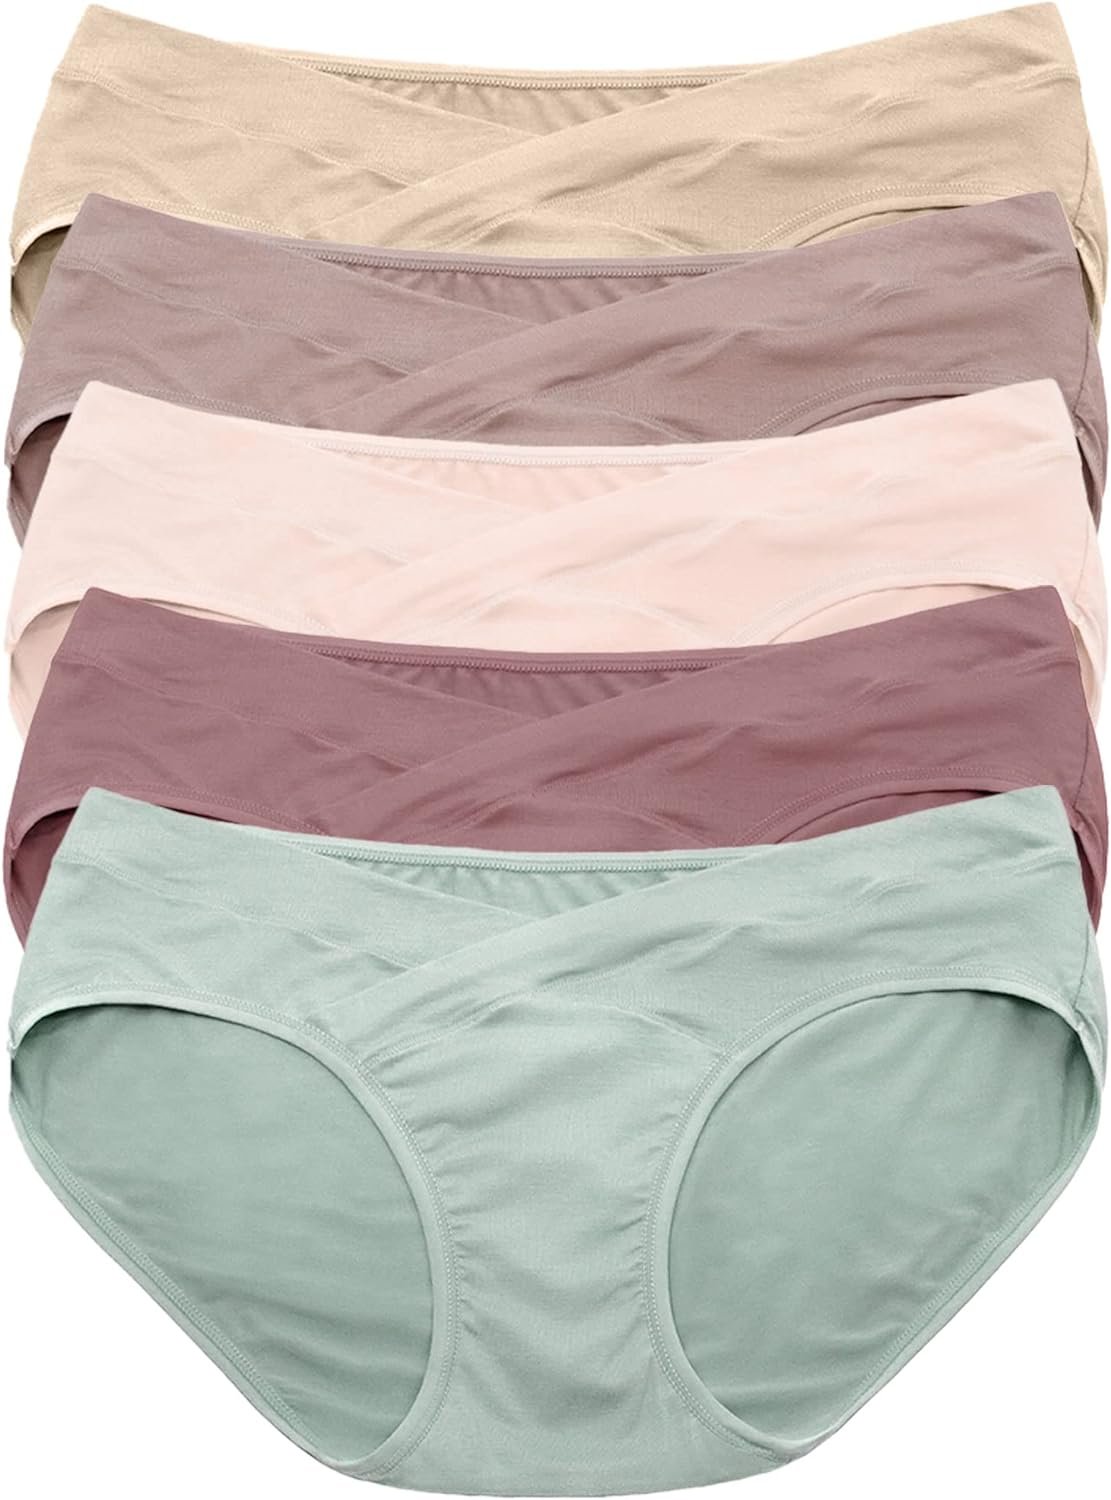 Kindred Bravely Under the Bump Maternity Underwear/Pregnancy Panties - Bikini 5 Pack